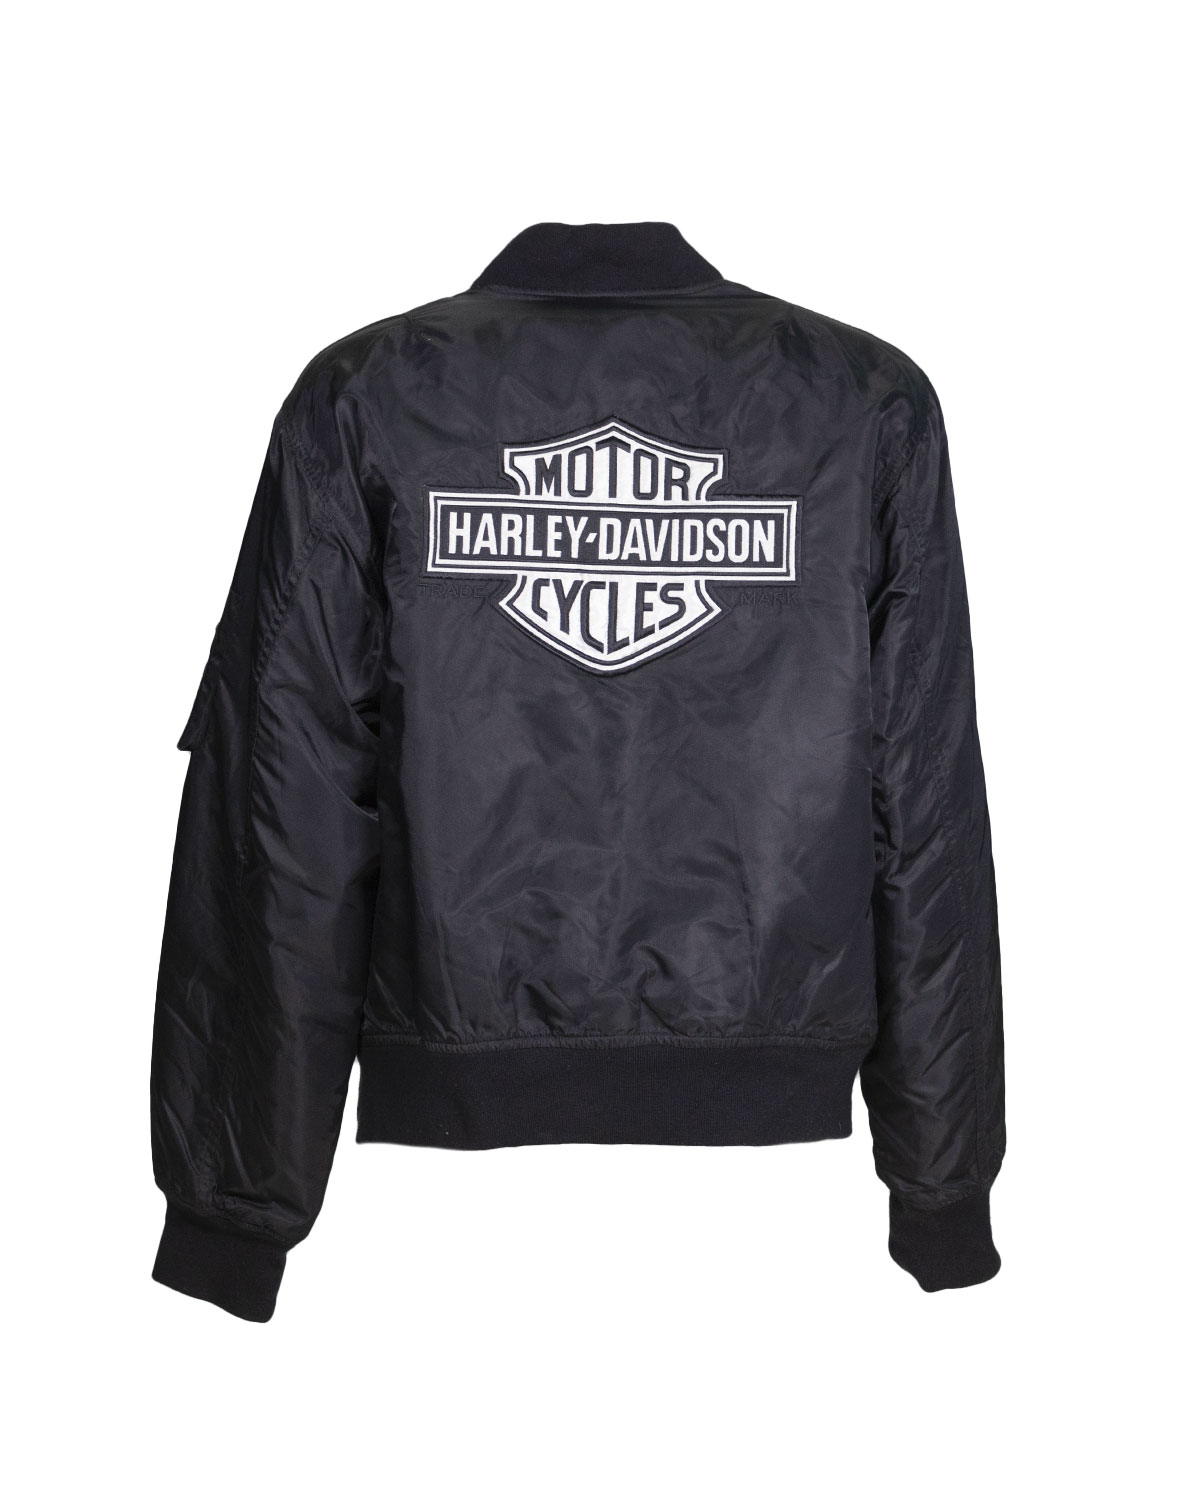 Harley Davidson - Nylon bomber jacket